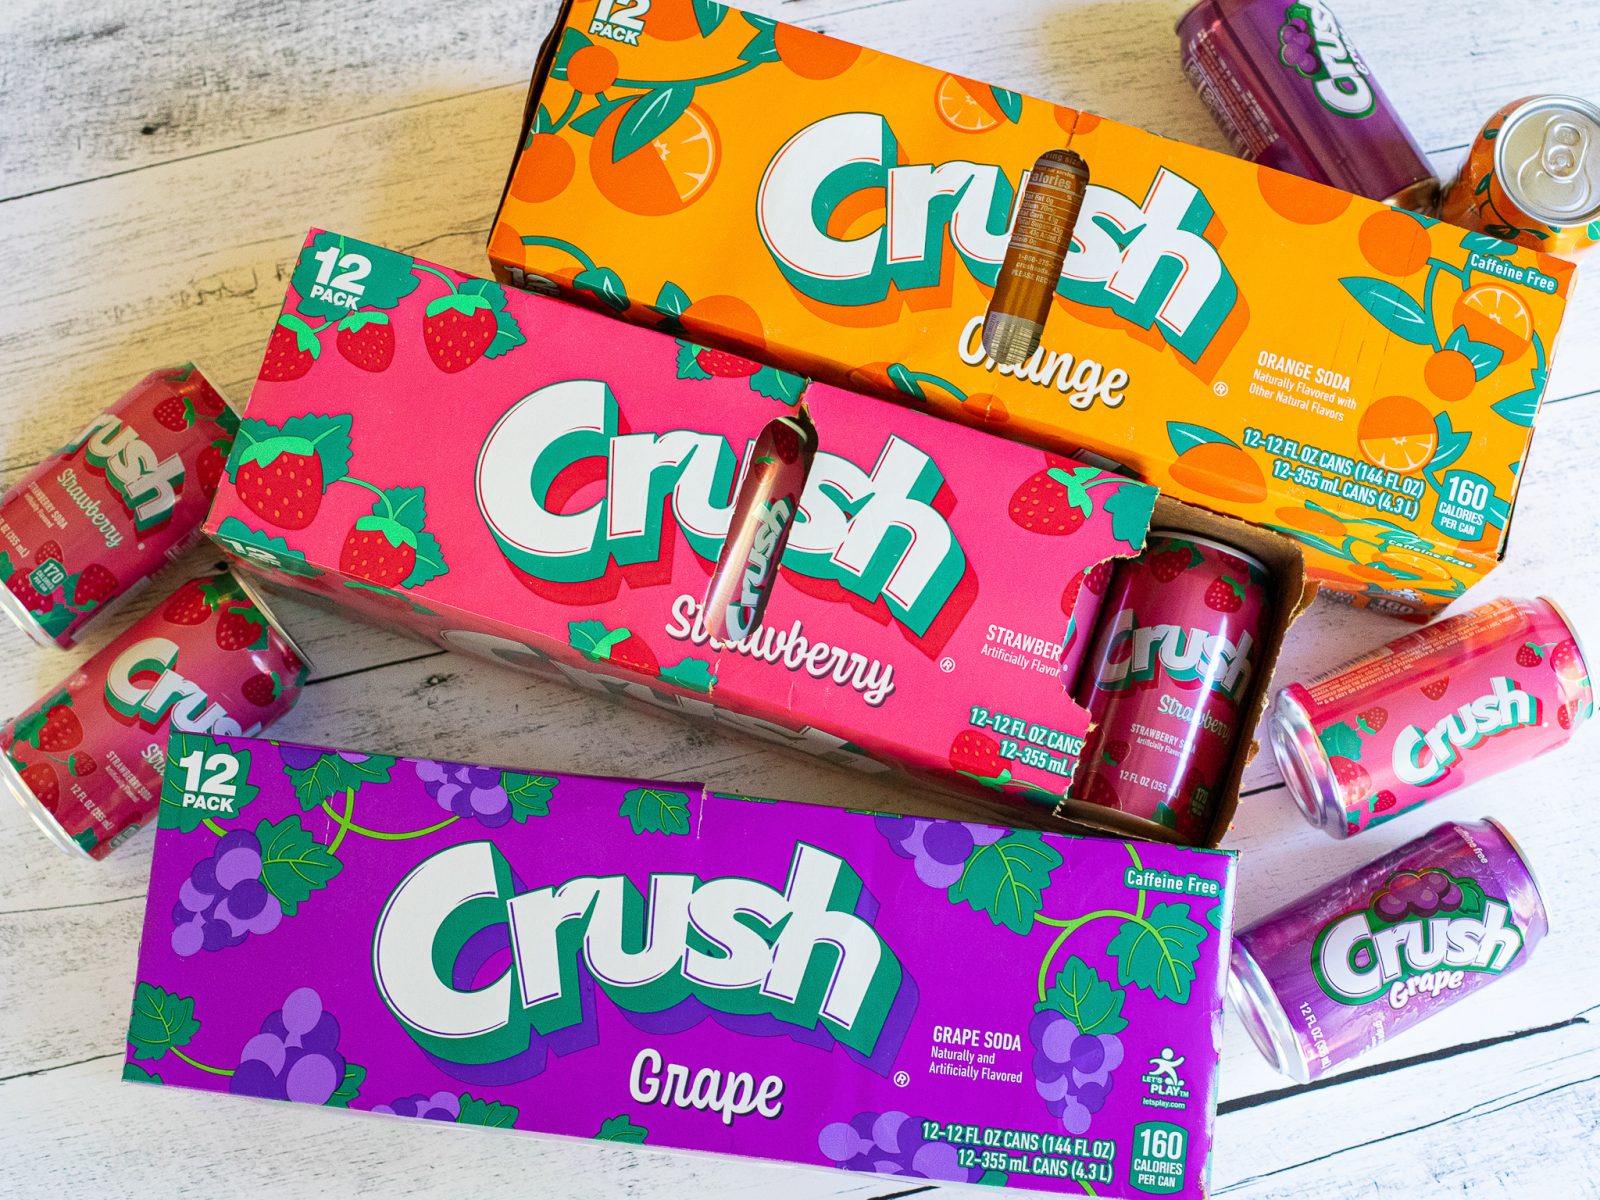 Crush Soda 12-As Low As $2.99 At Kroger (Regular Price $8.99)